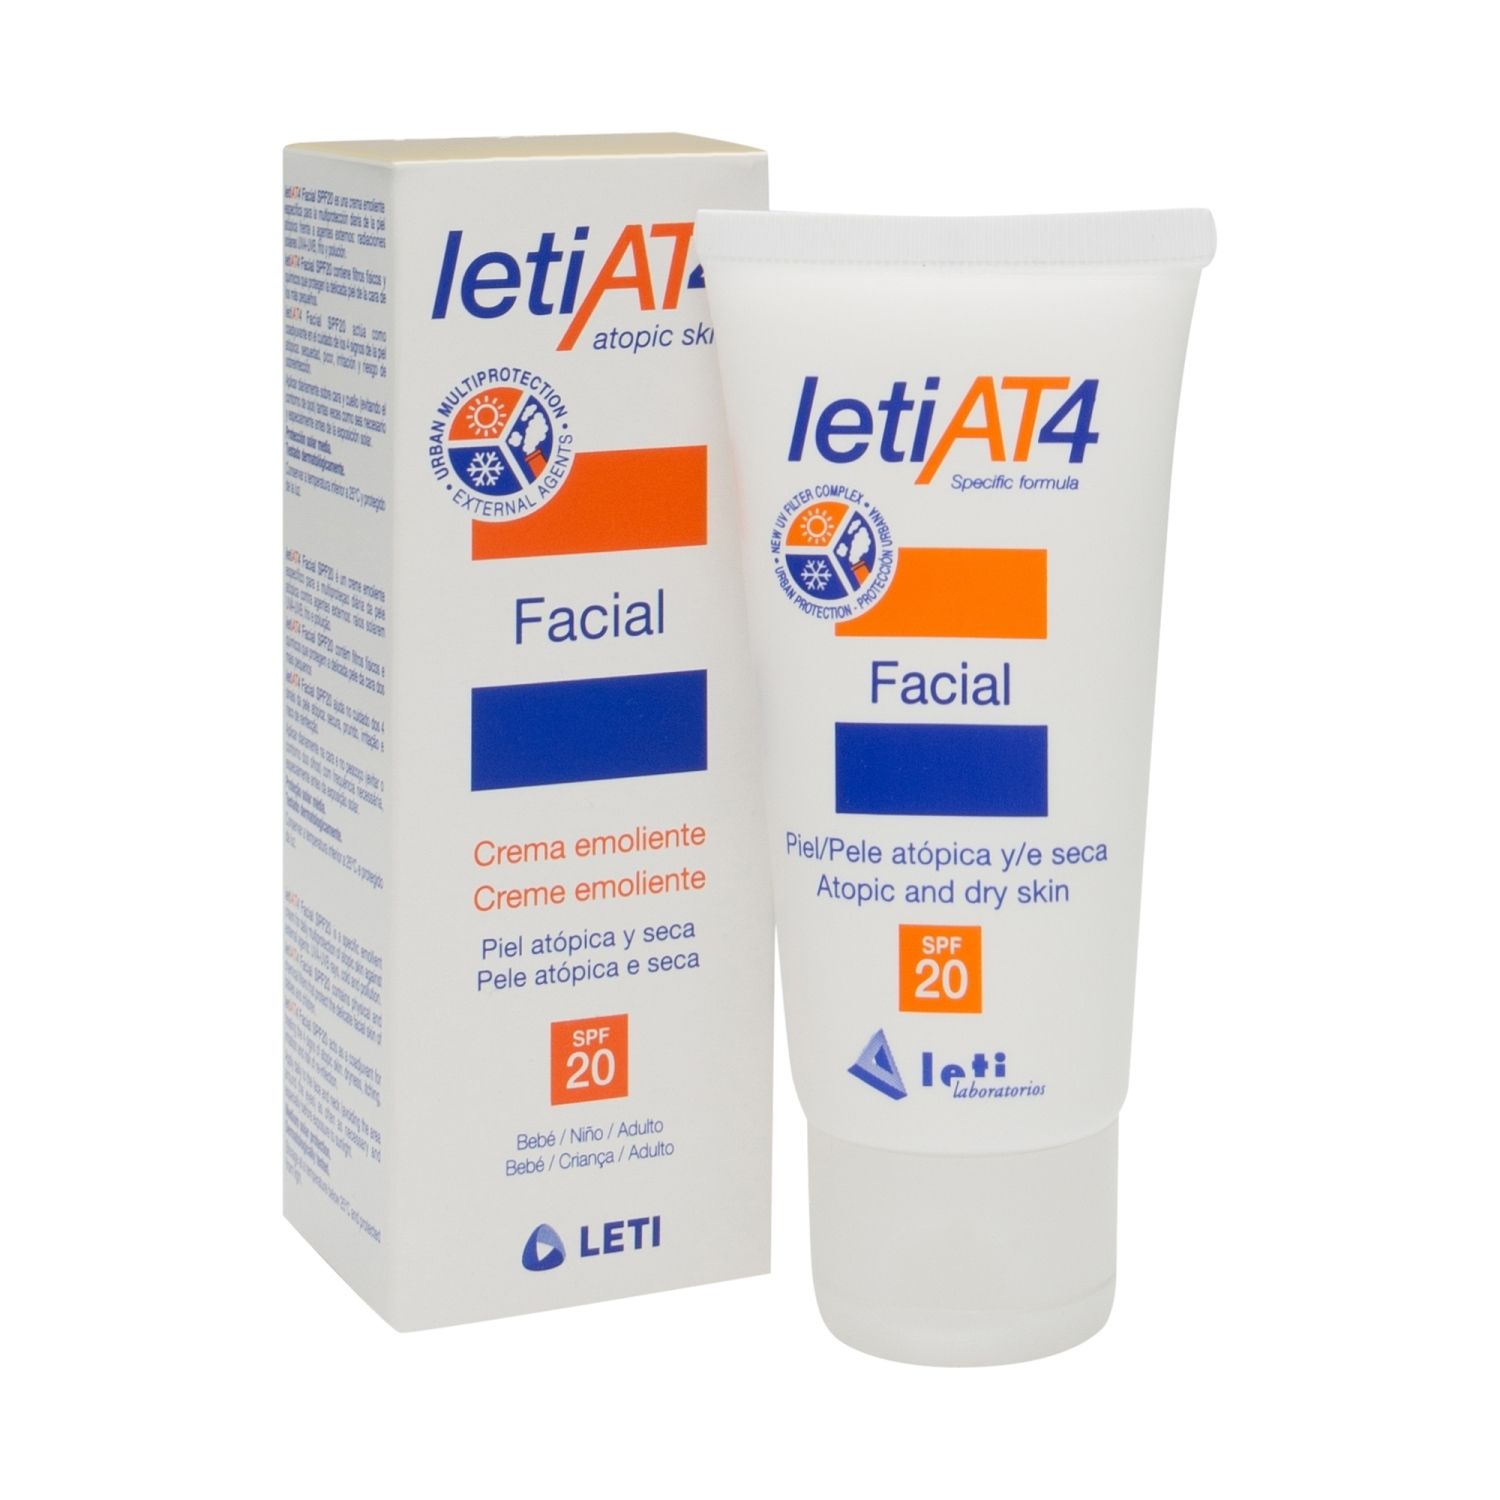 letiat4 protecci n facial spf20 50ml